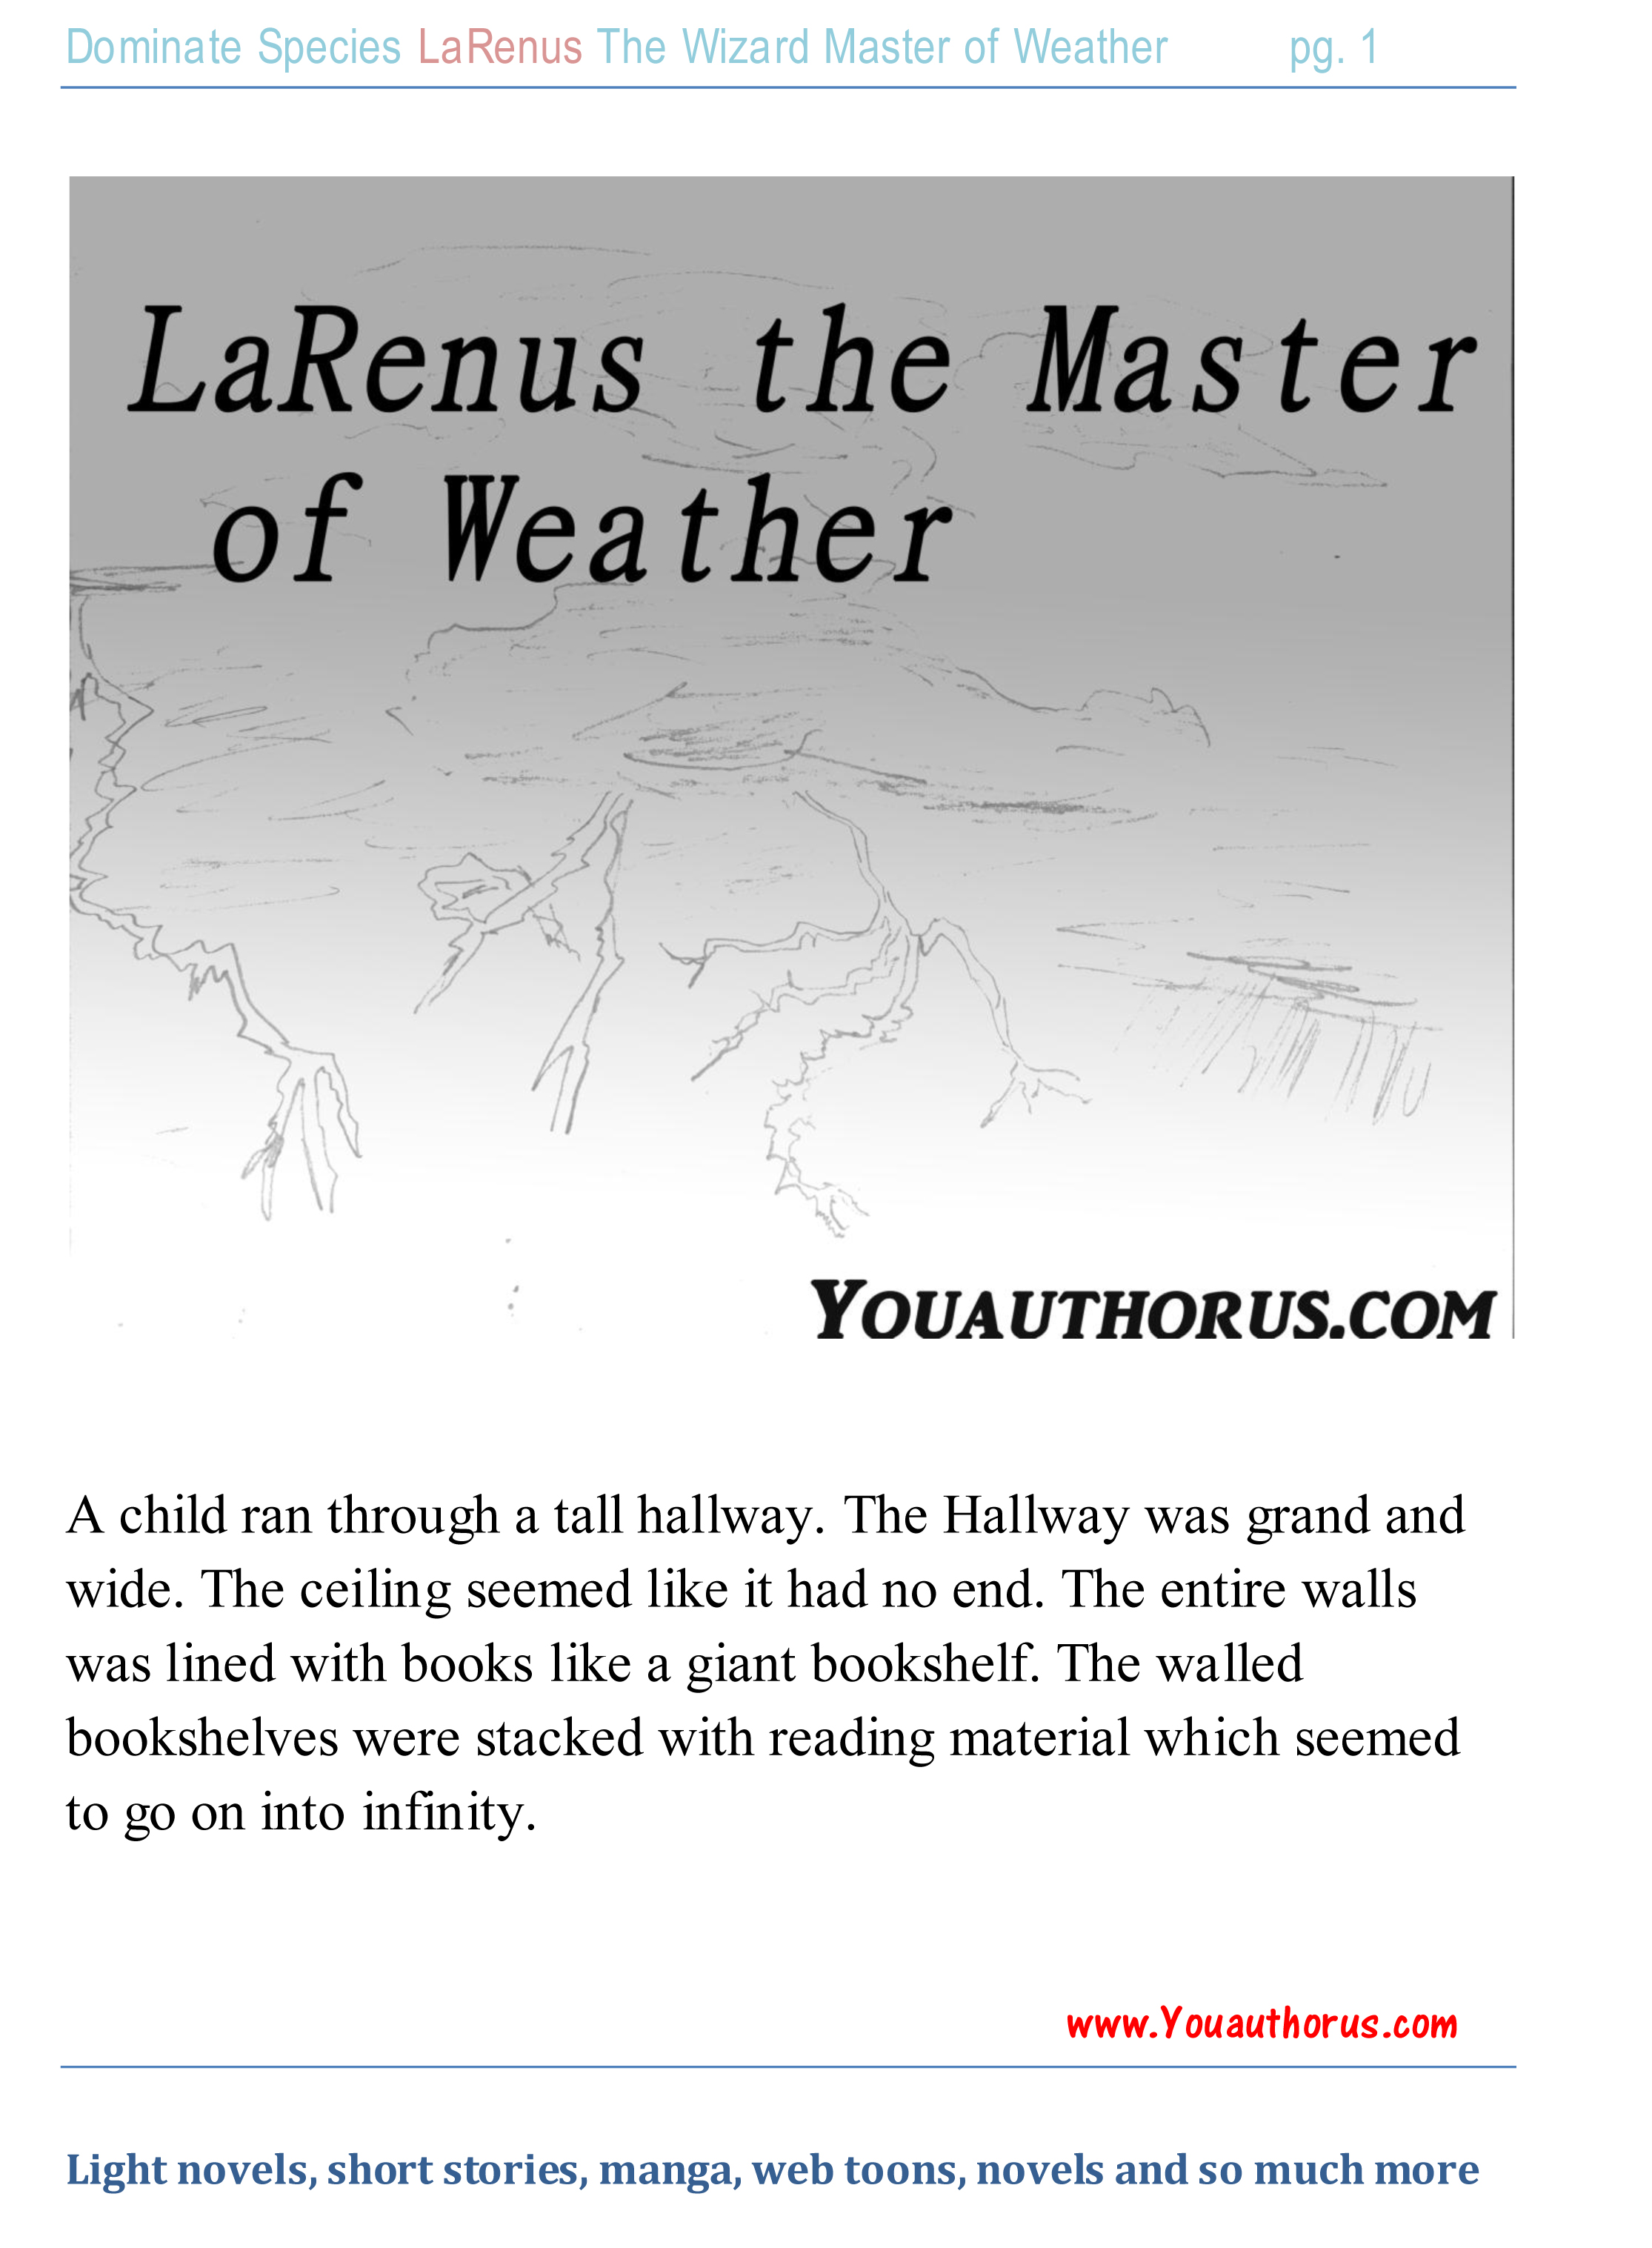 Dominate-Species-LaRenus-the-wizard-master-of-weather-1-copy